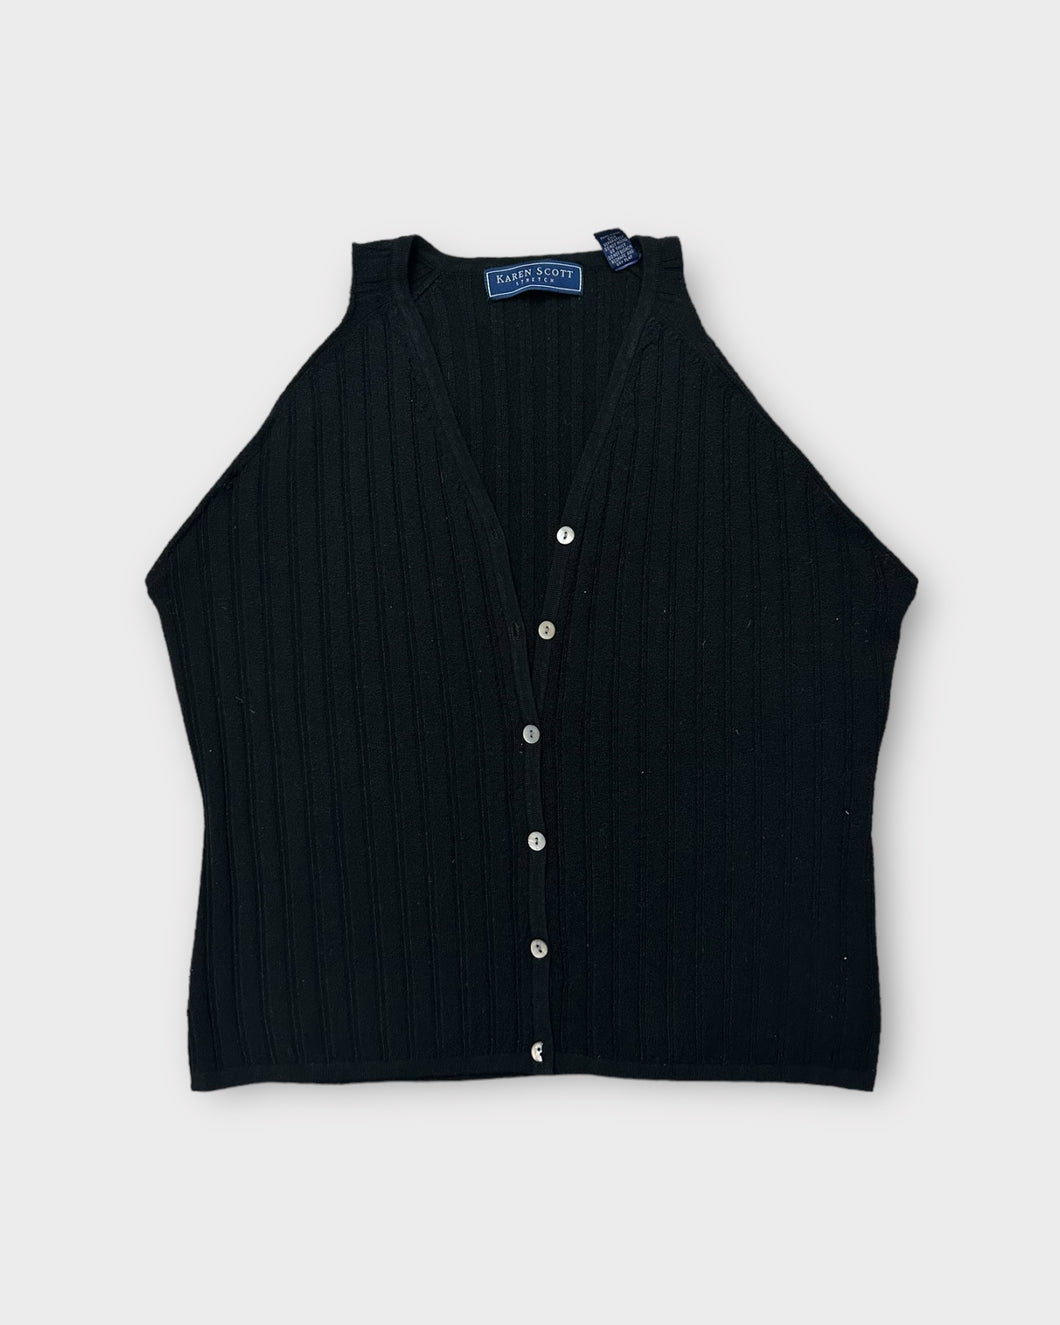 Karen Scott Black Rib Knit Button Up Sweater Vest (M)